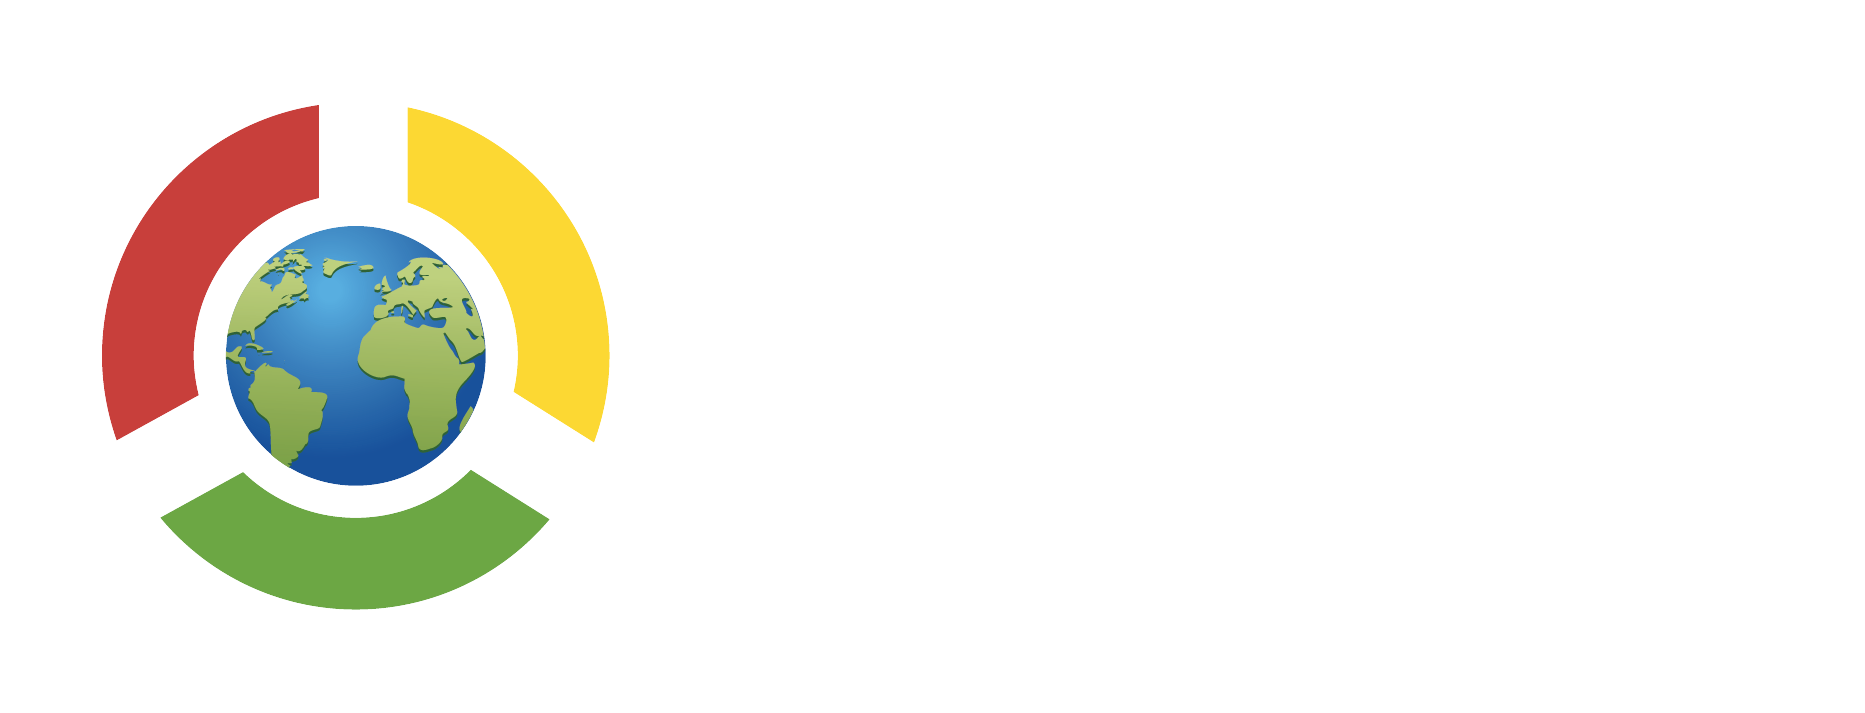 HTP Global Technologies